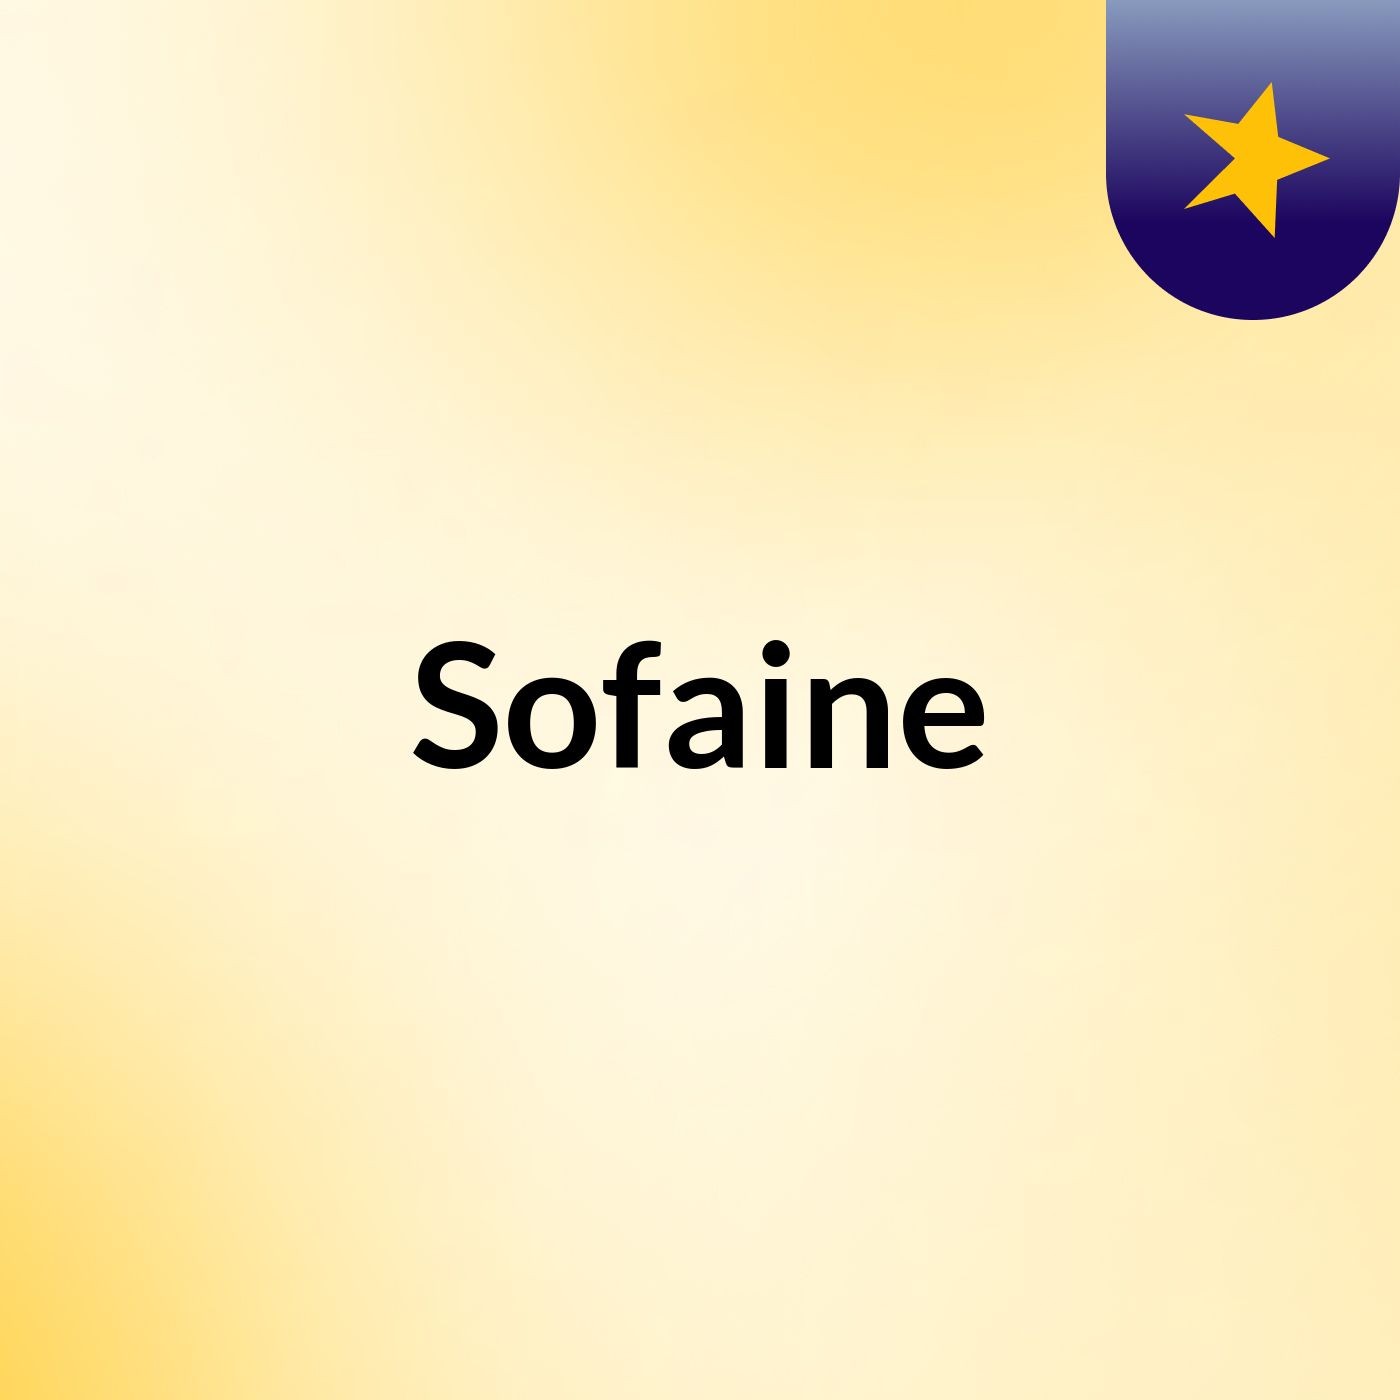 Sofaine